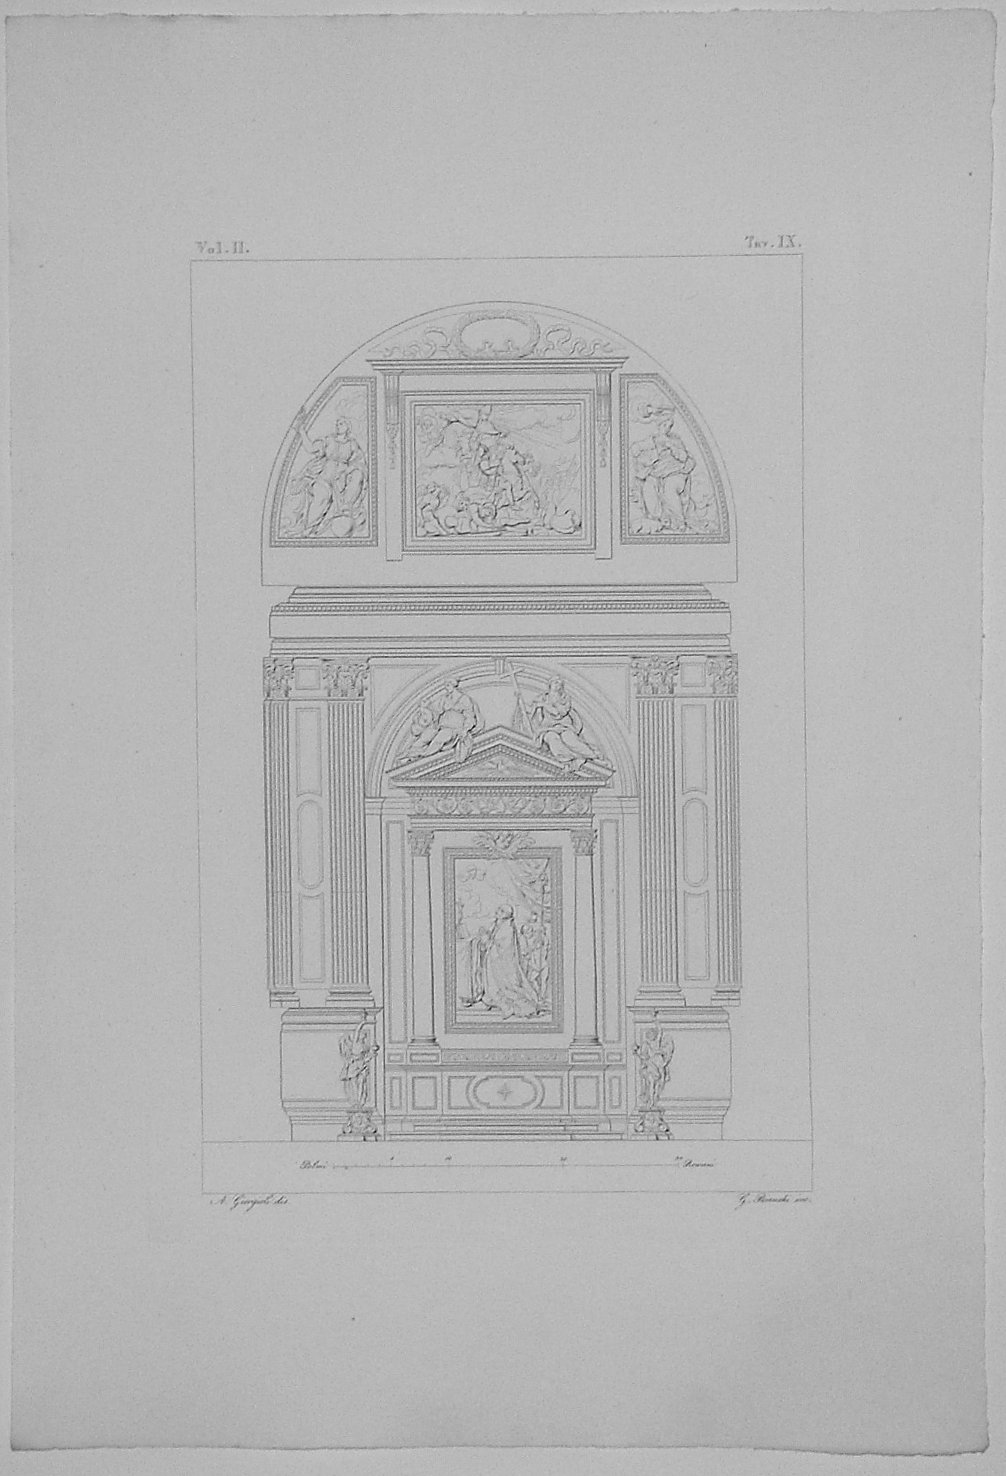 ALTARE (stampa, serie) di Bianchi Giuseppe, Giorgioli A (secondo quarto sec. XIX)